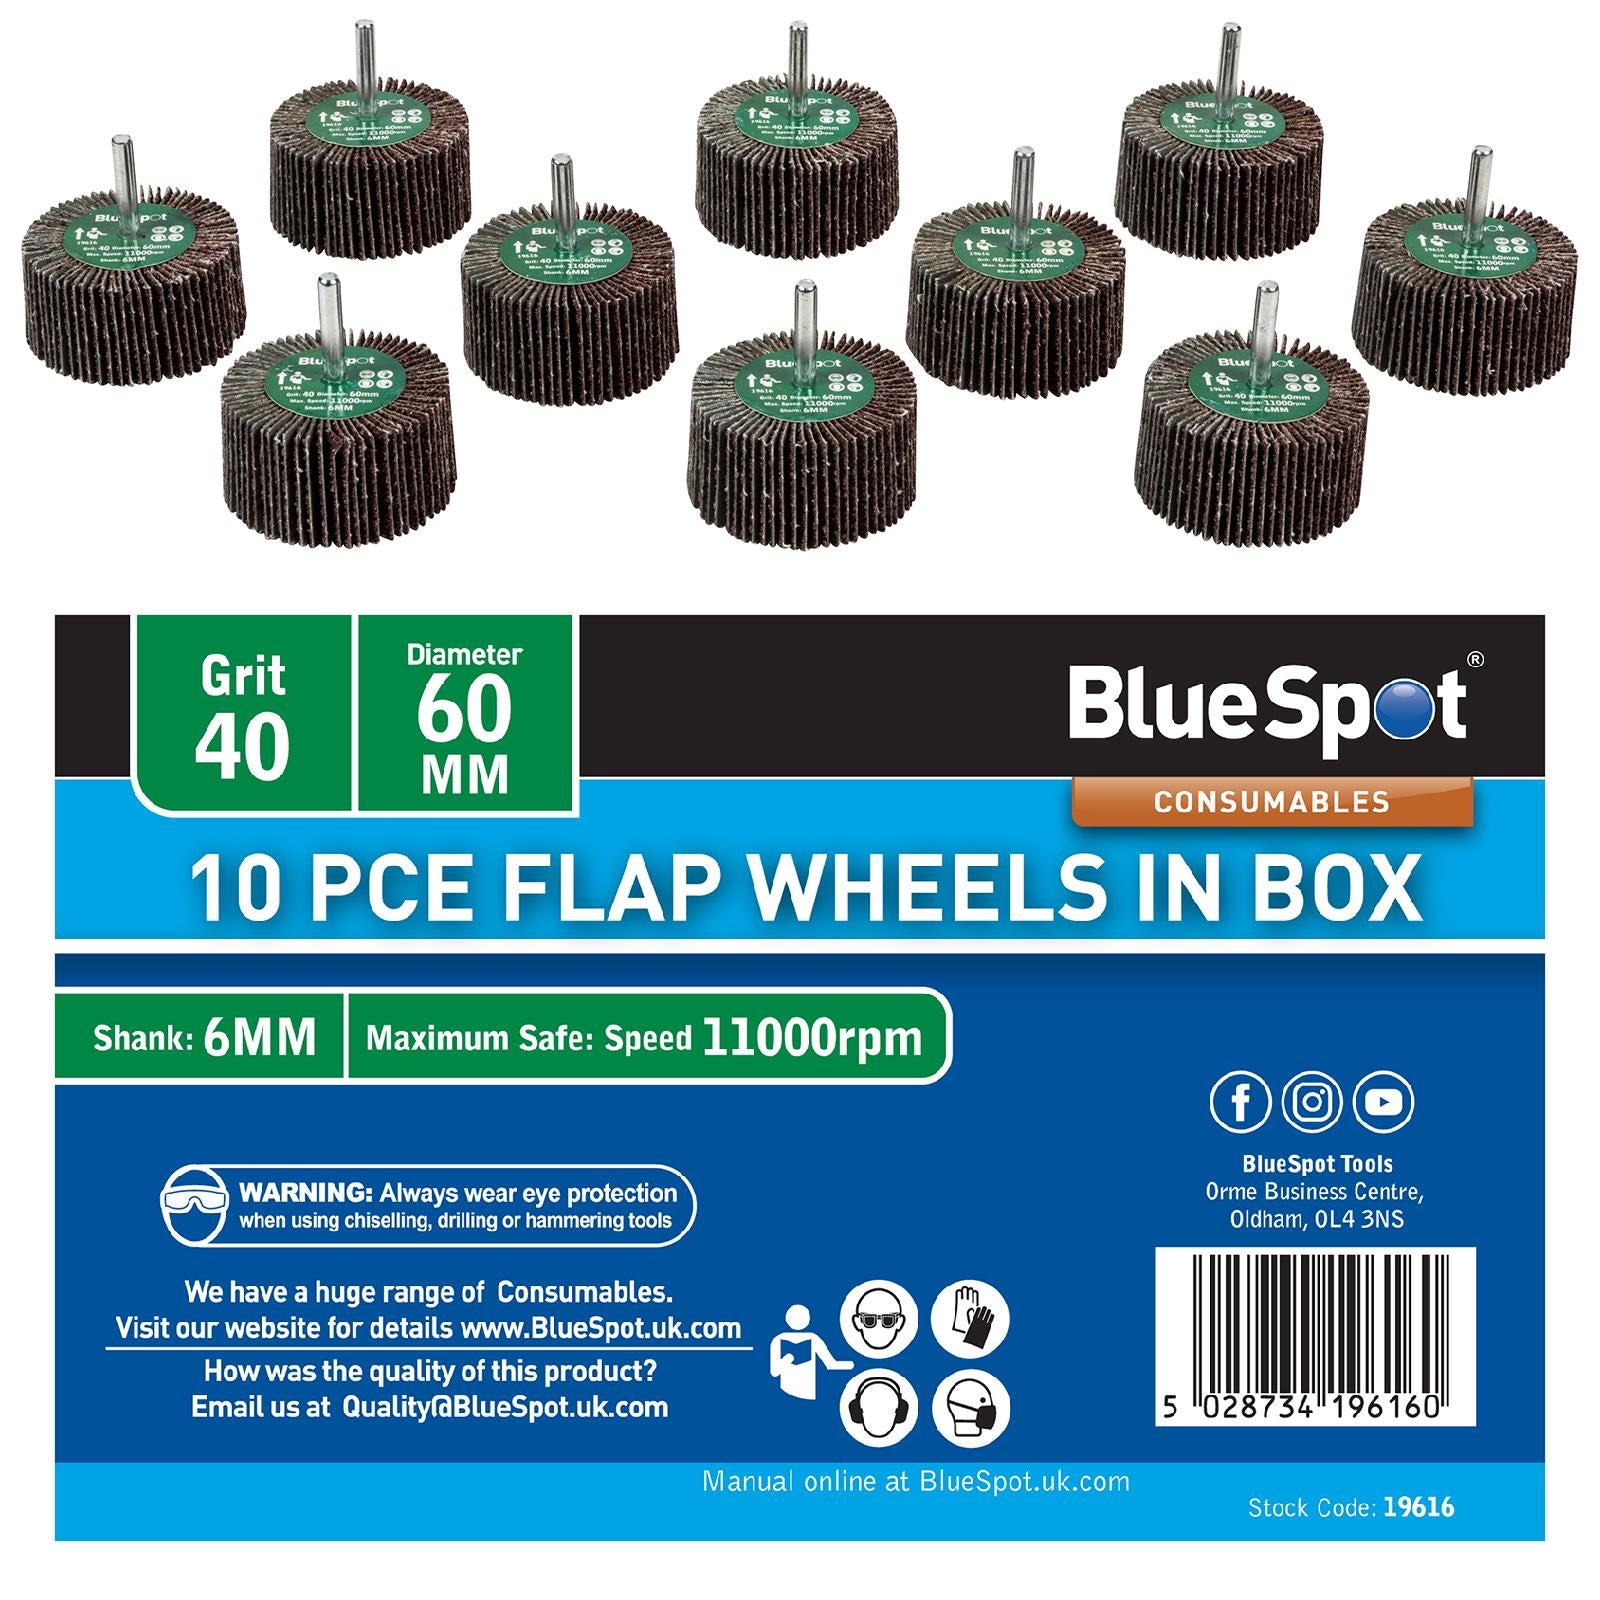 BlueSpot Flap Wheels In Box 10 Pieces 40 Grit 60mm